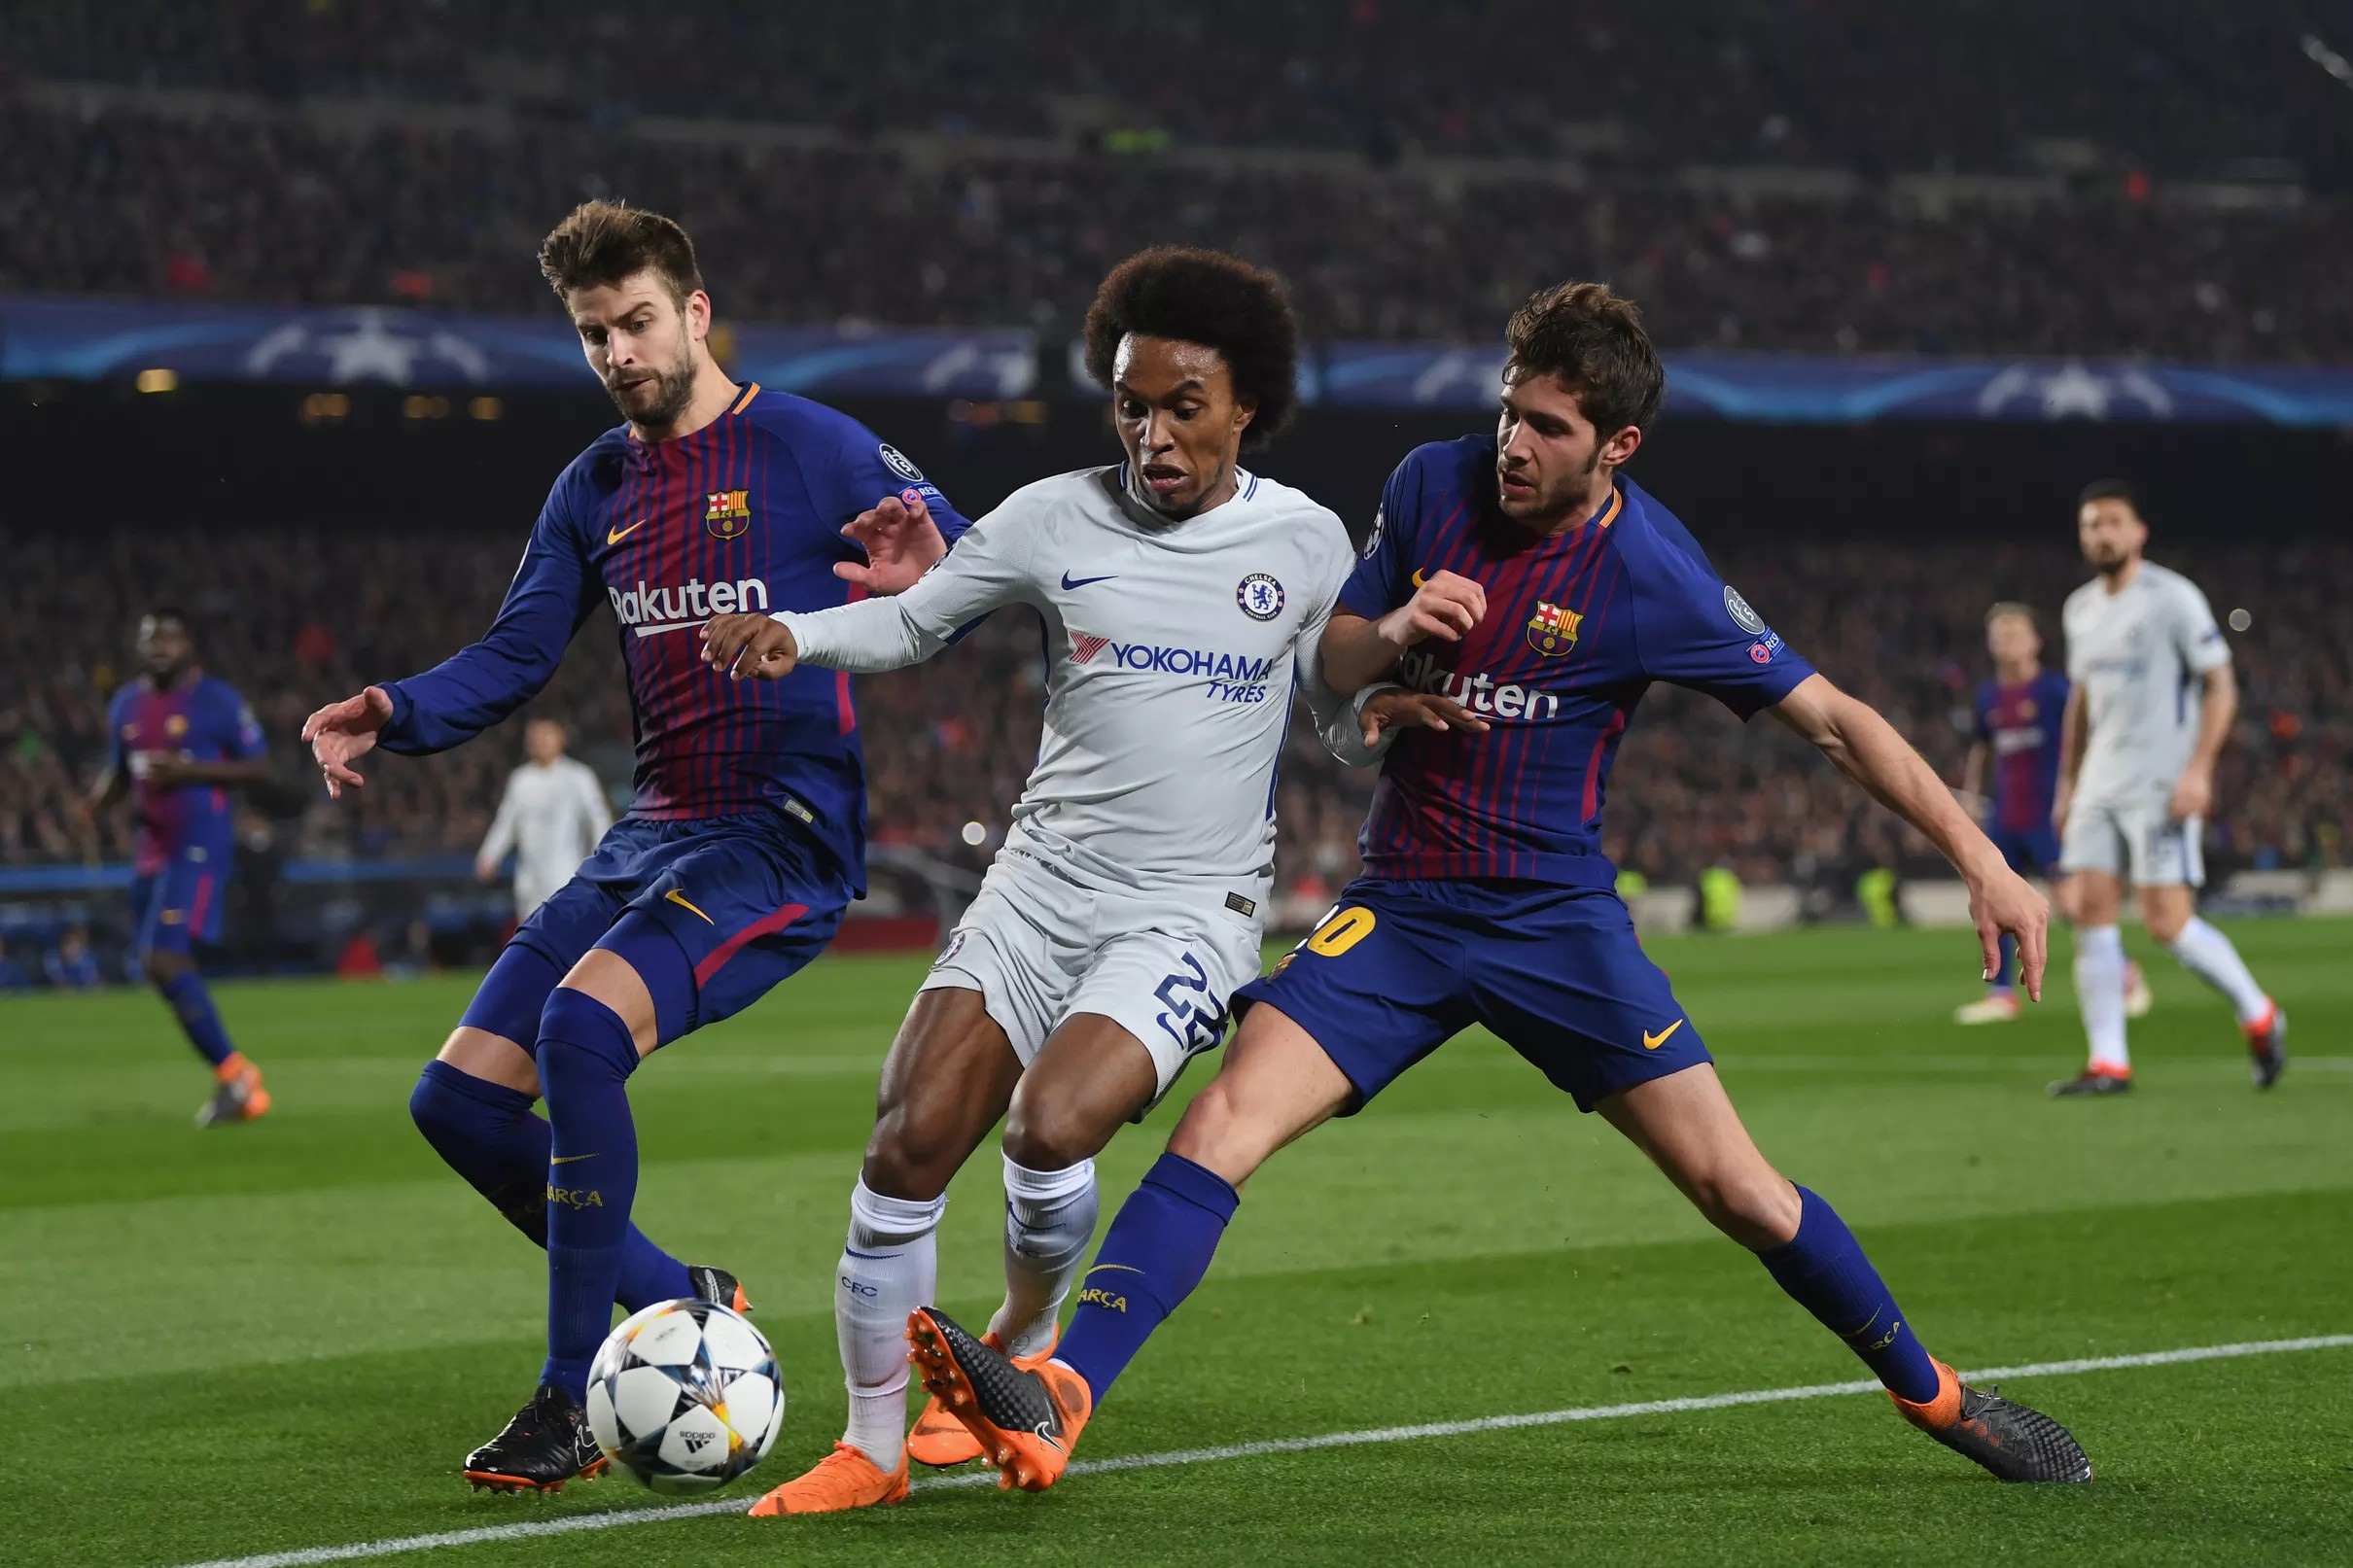 UEFA Champions League - Barcelona vs. Chelsea - Tactical Review